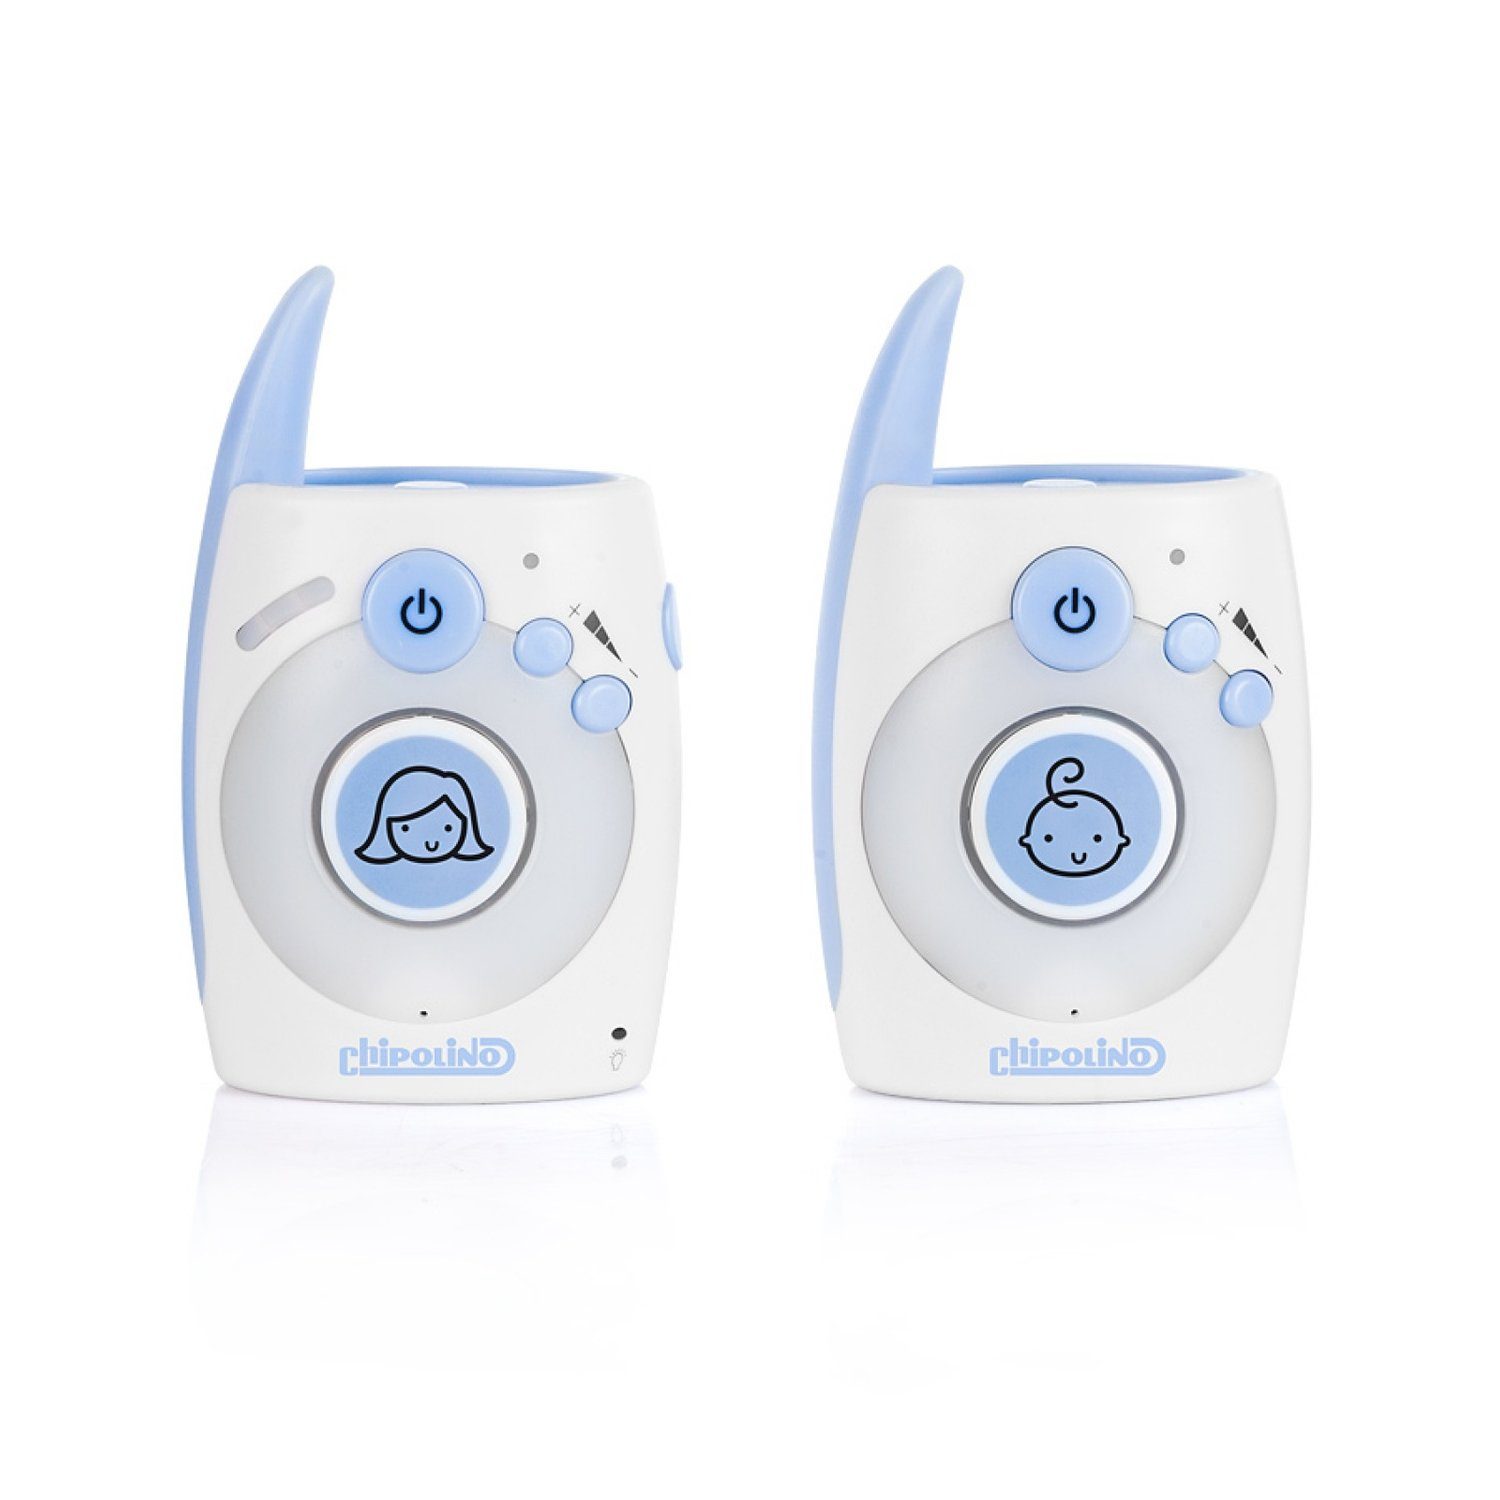 Chipolino Babyphone Babyphone Astro USB-Adapter, 300 m Reichweite, Zweiwege-Kommunikation, USB Adapter blau